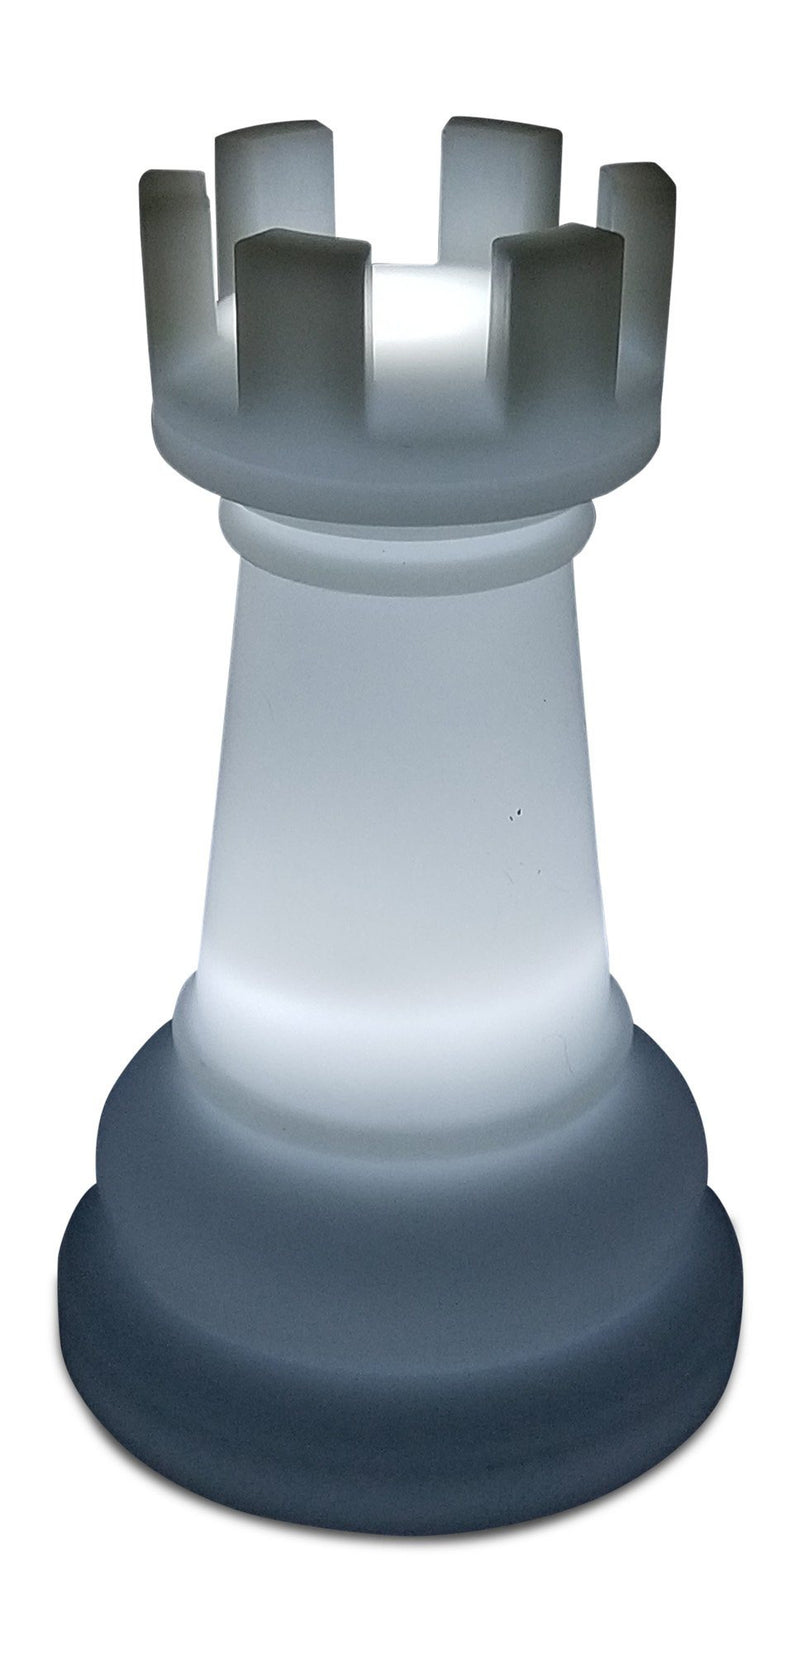 MegaChess 23 Inch Perfect Rook Light-Up Giant Chess Piece - White |  | MegaChess.com